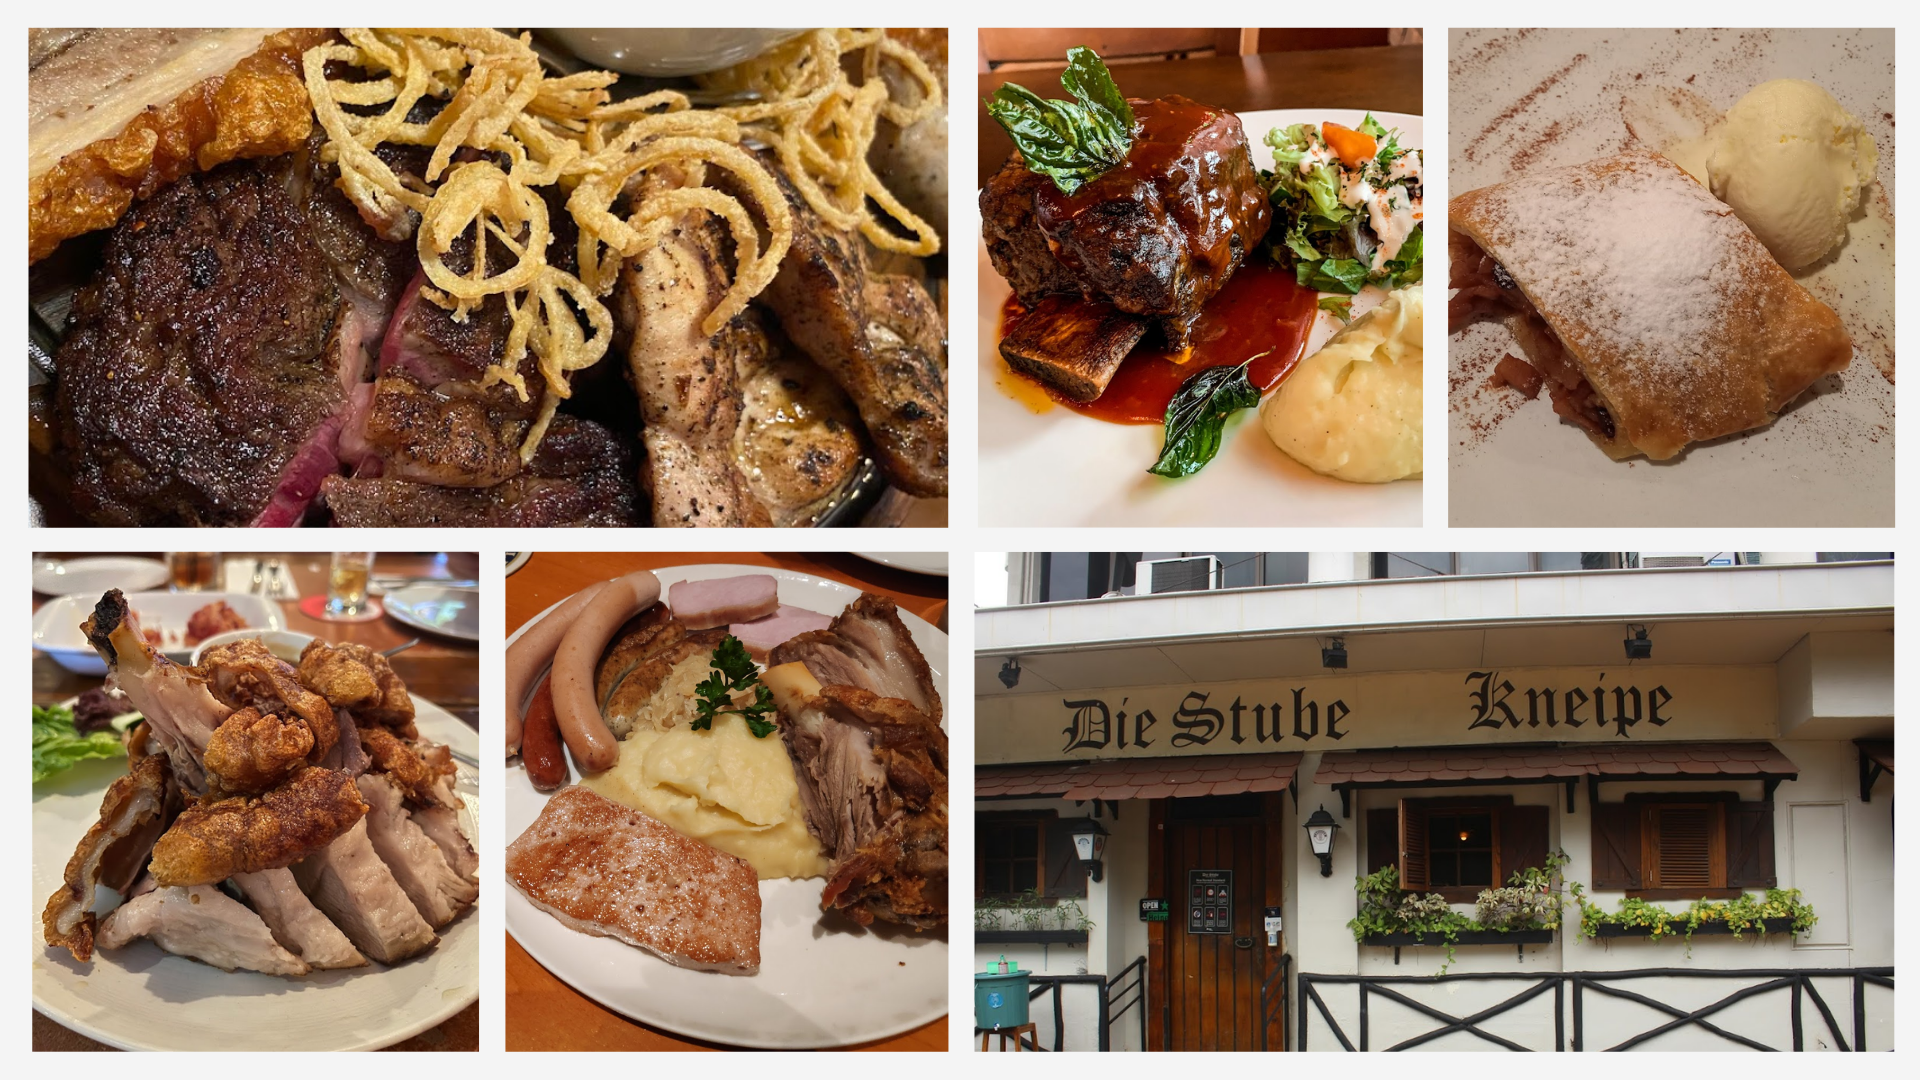 Restoran - Die Stube by Stube Group -17 Restoran untuk Makan Siang di Jakarta Selatan - YOEXPLORE